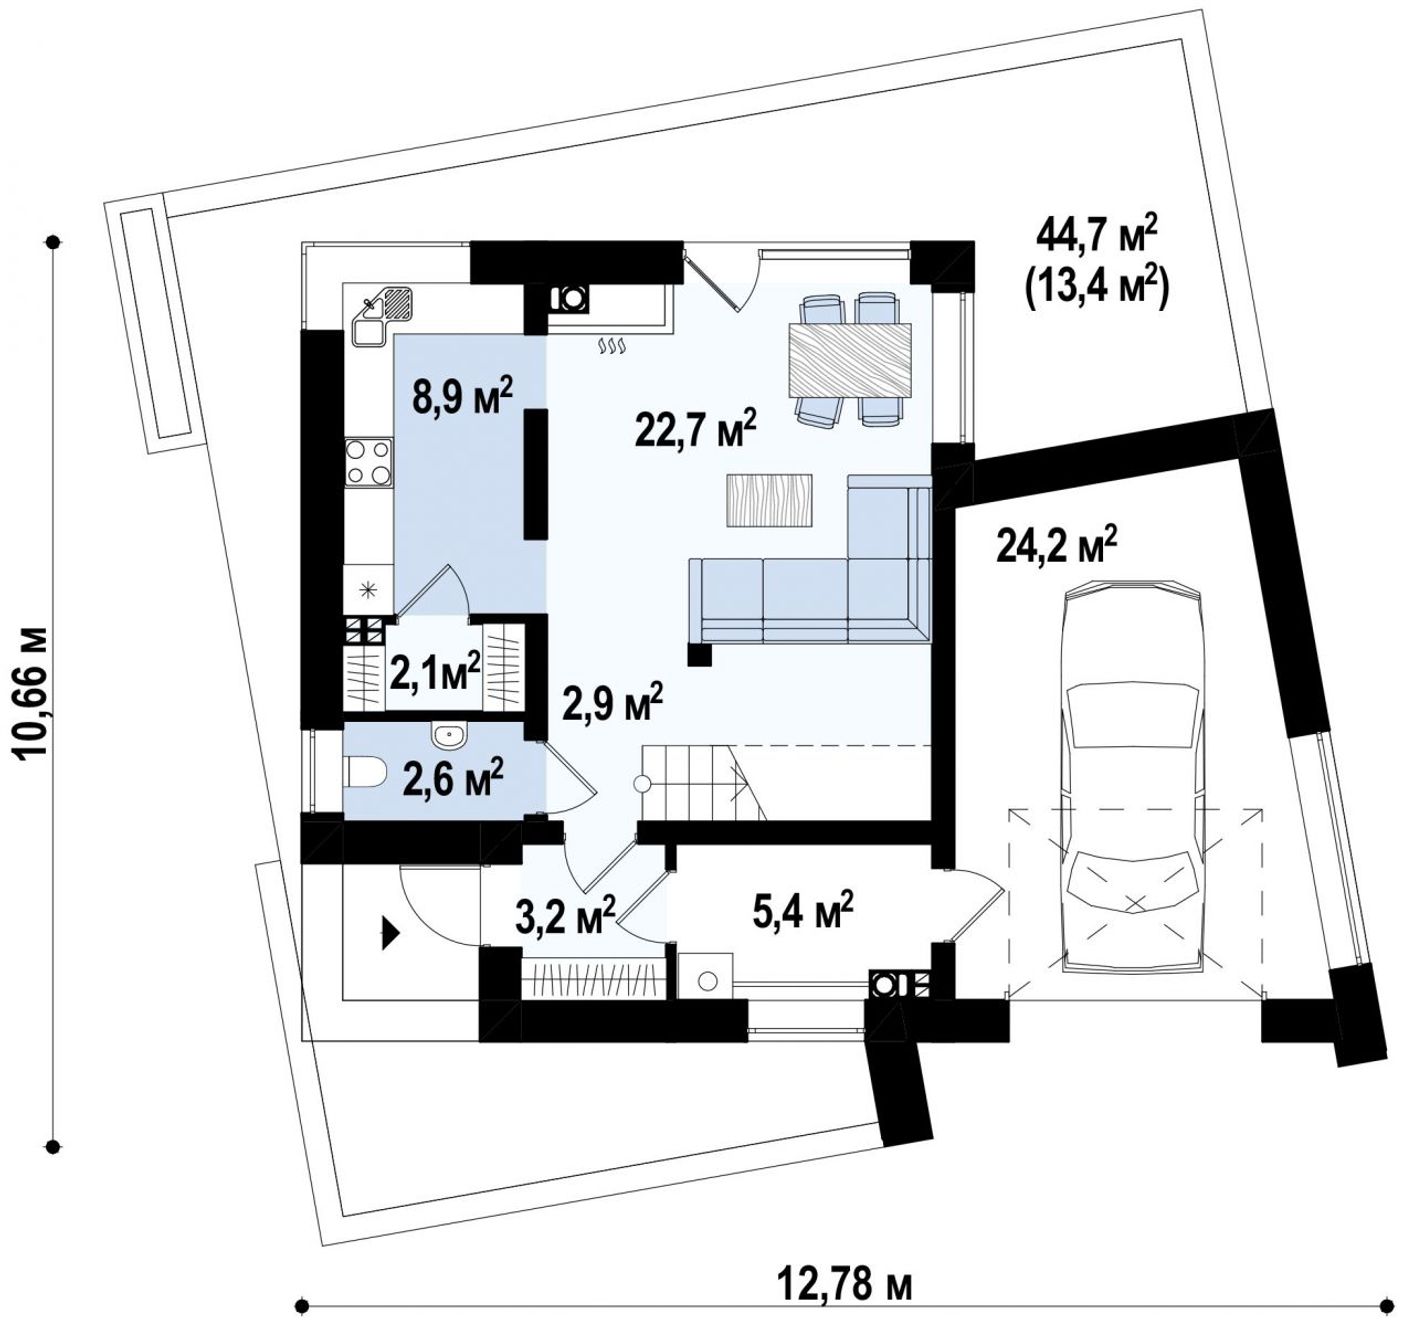 1-ый этаж - план проекта Zx51